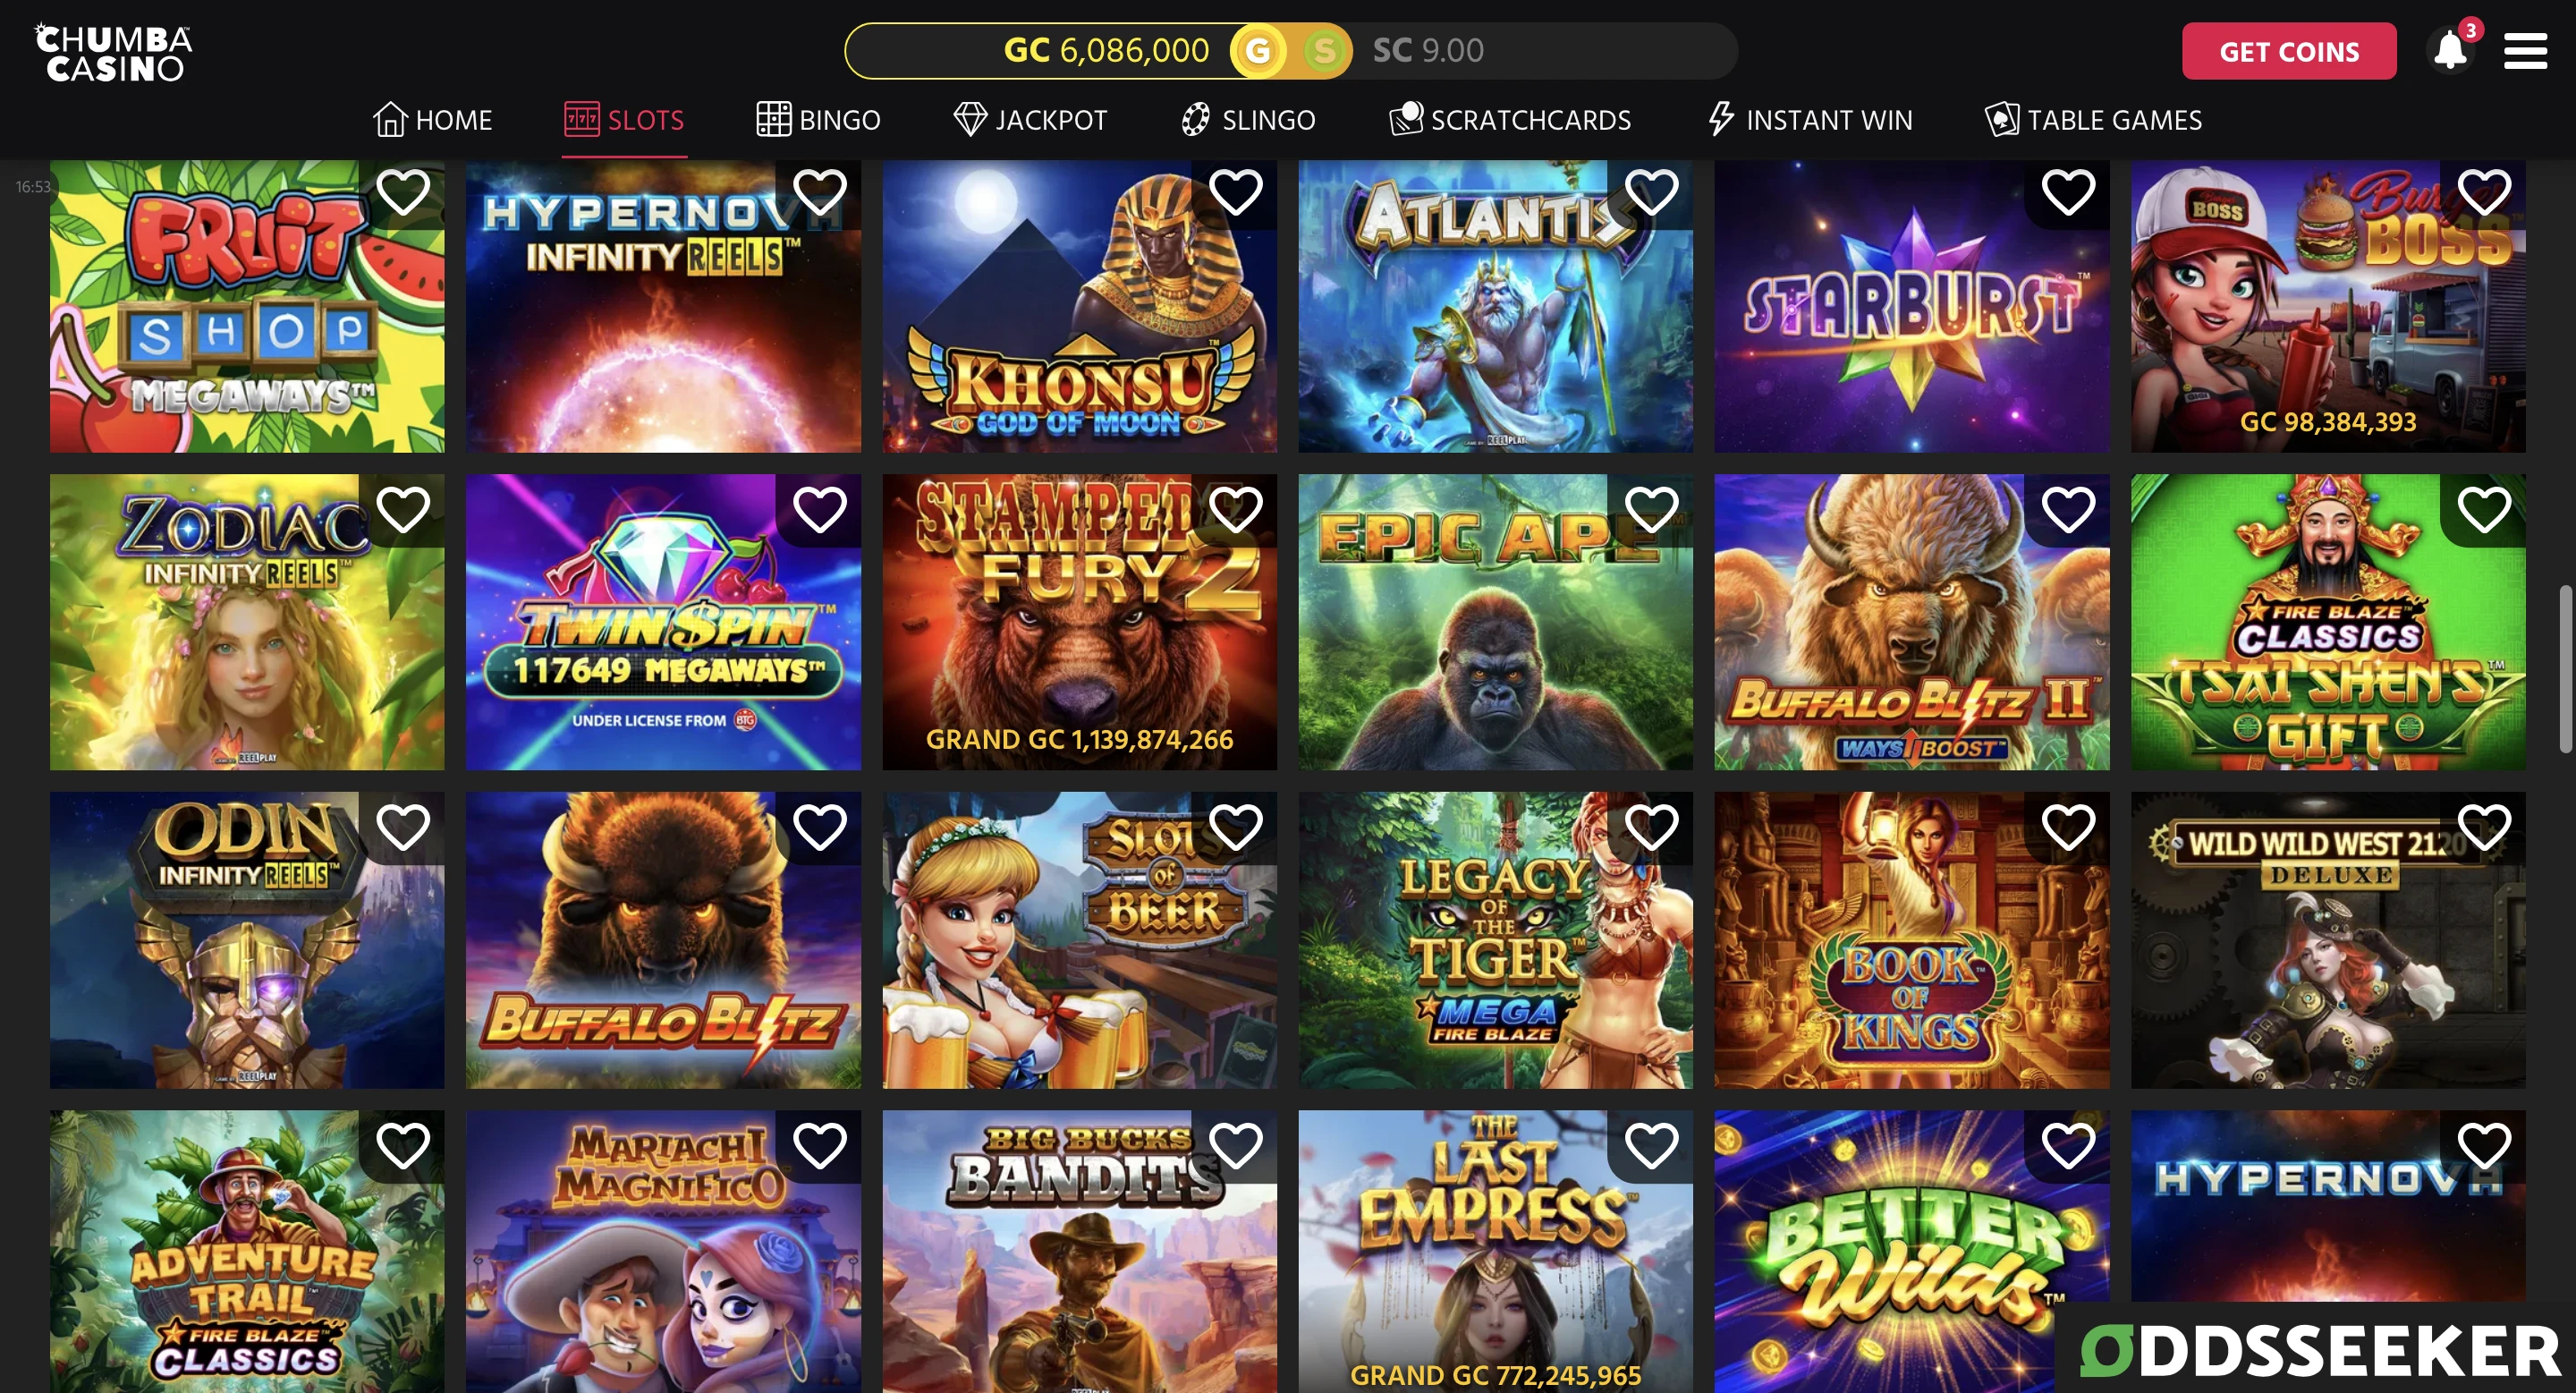 Screenshot of 24 Chumba Casino slots with the OddsSeeker watermark logo in the bottom right hand corner of the screen.